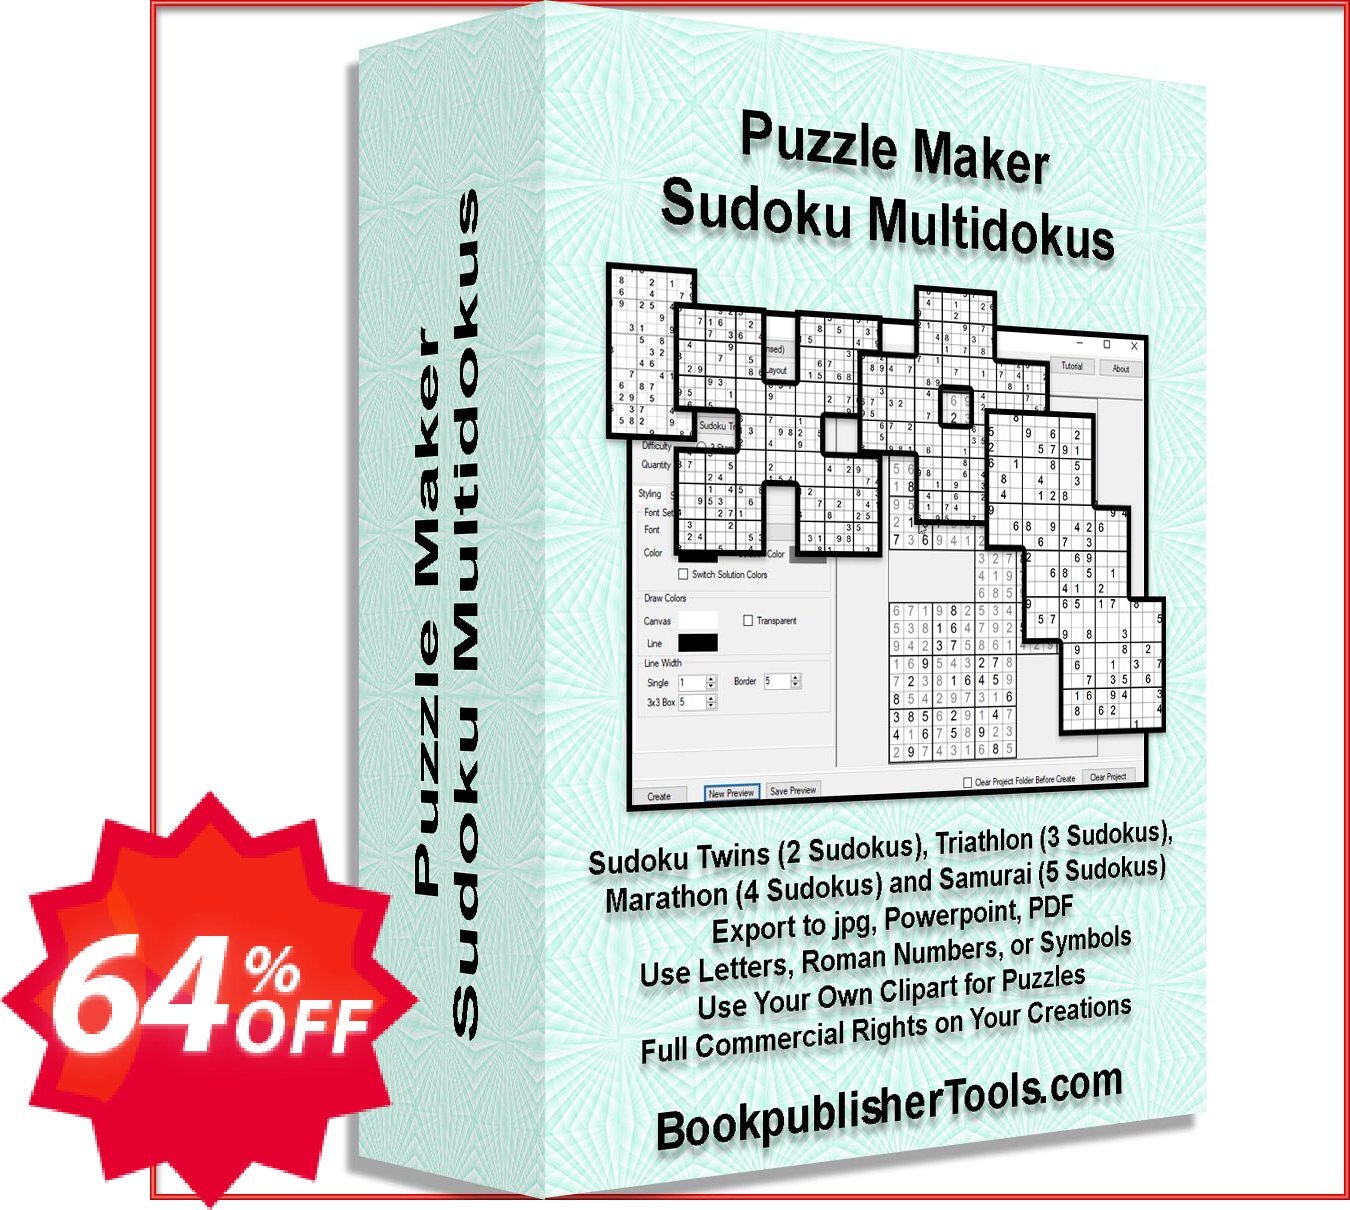 Puzzle Maker Sudoku Multidokus Coupon code 64% discount 